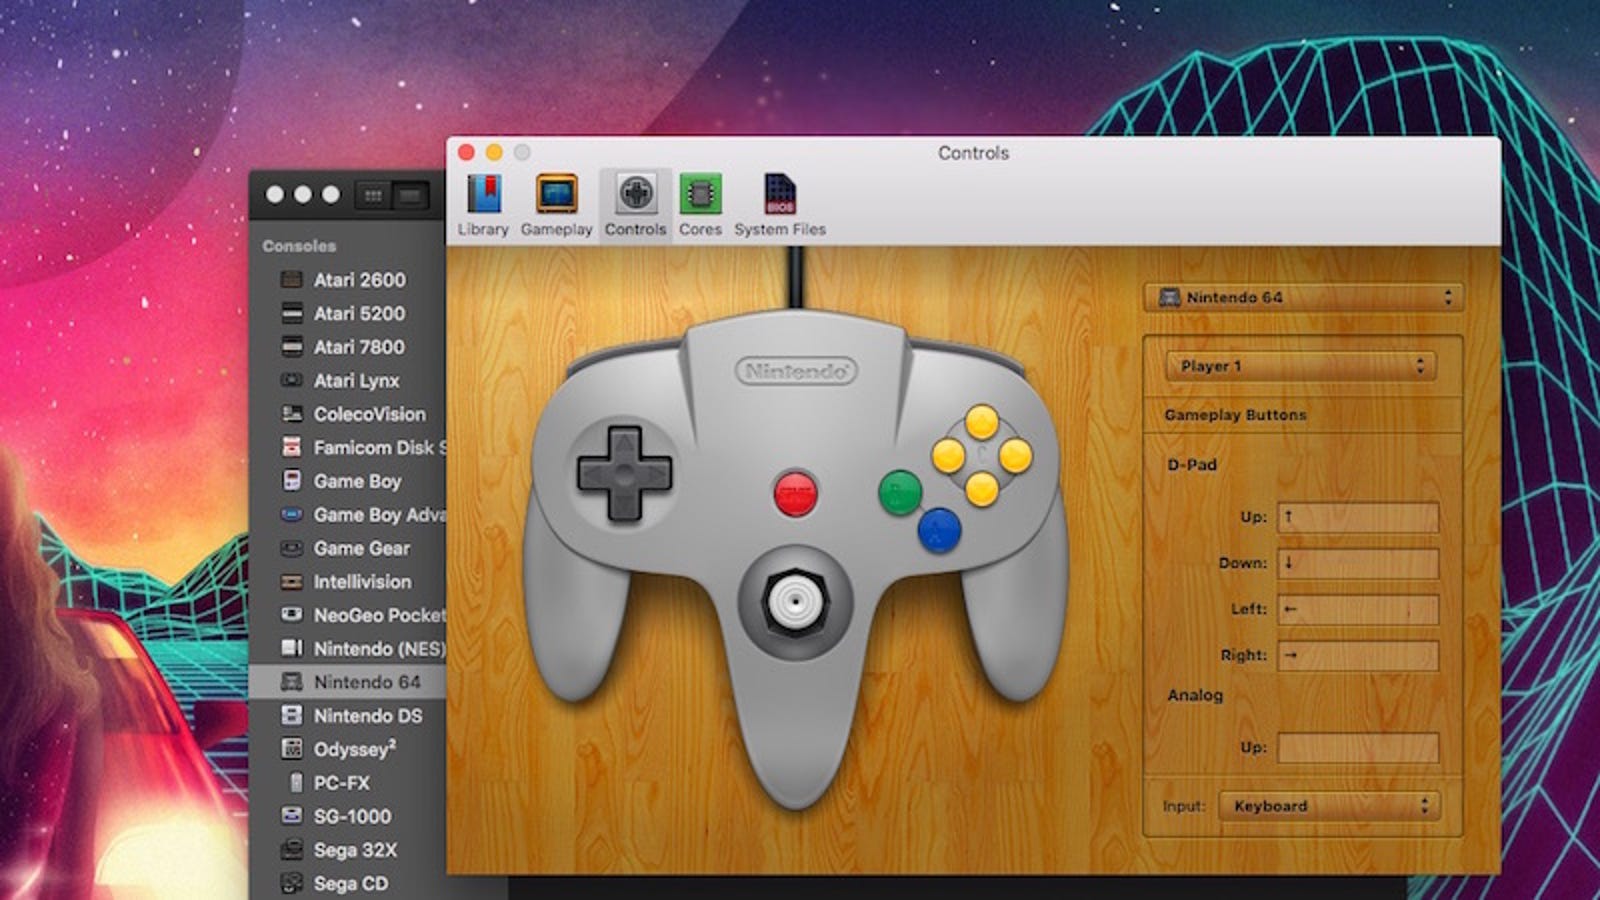 what is a good n64 emulator for mac